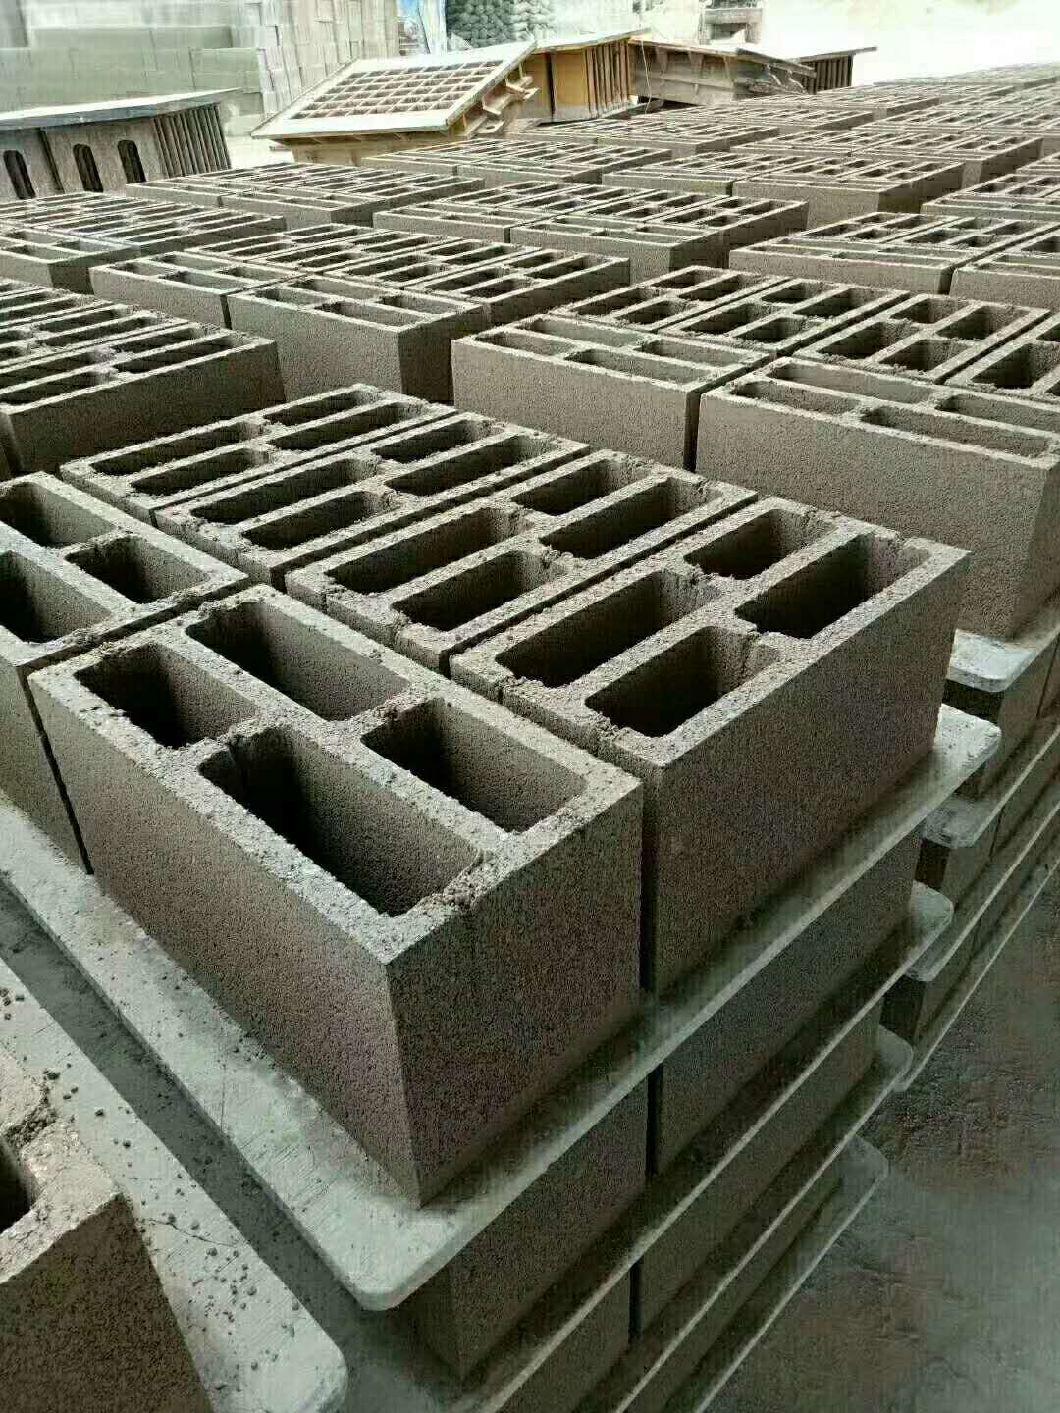 Full Automatic Concrete Brick Making Machine